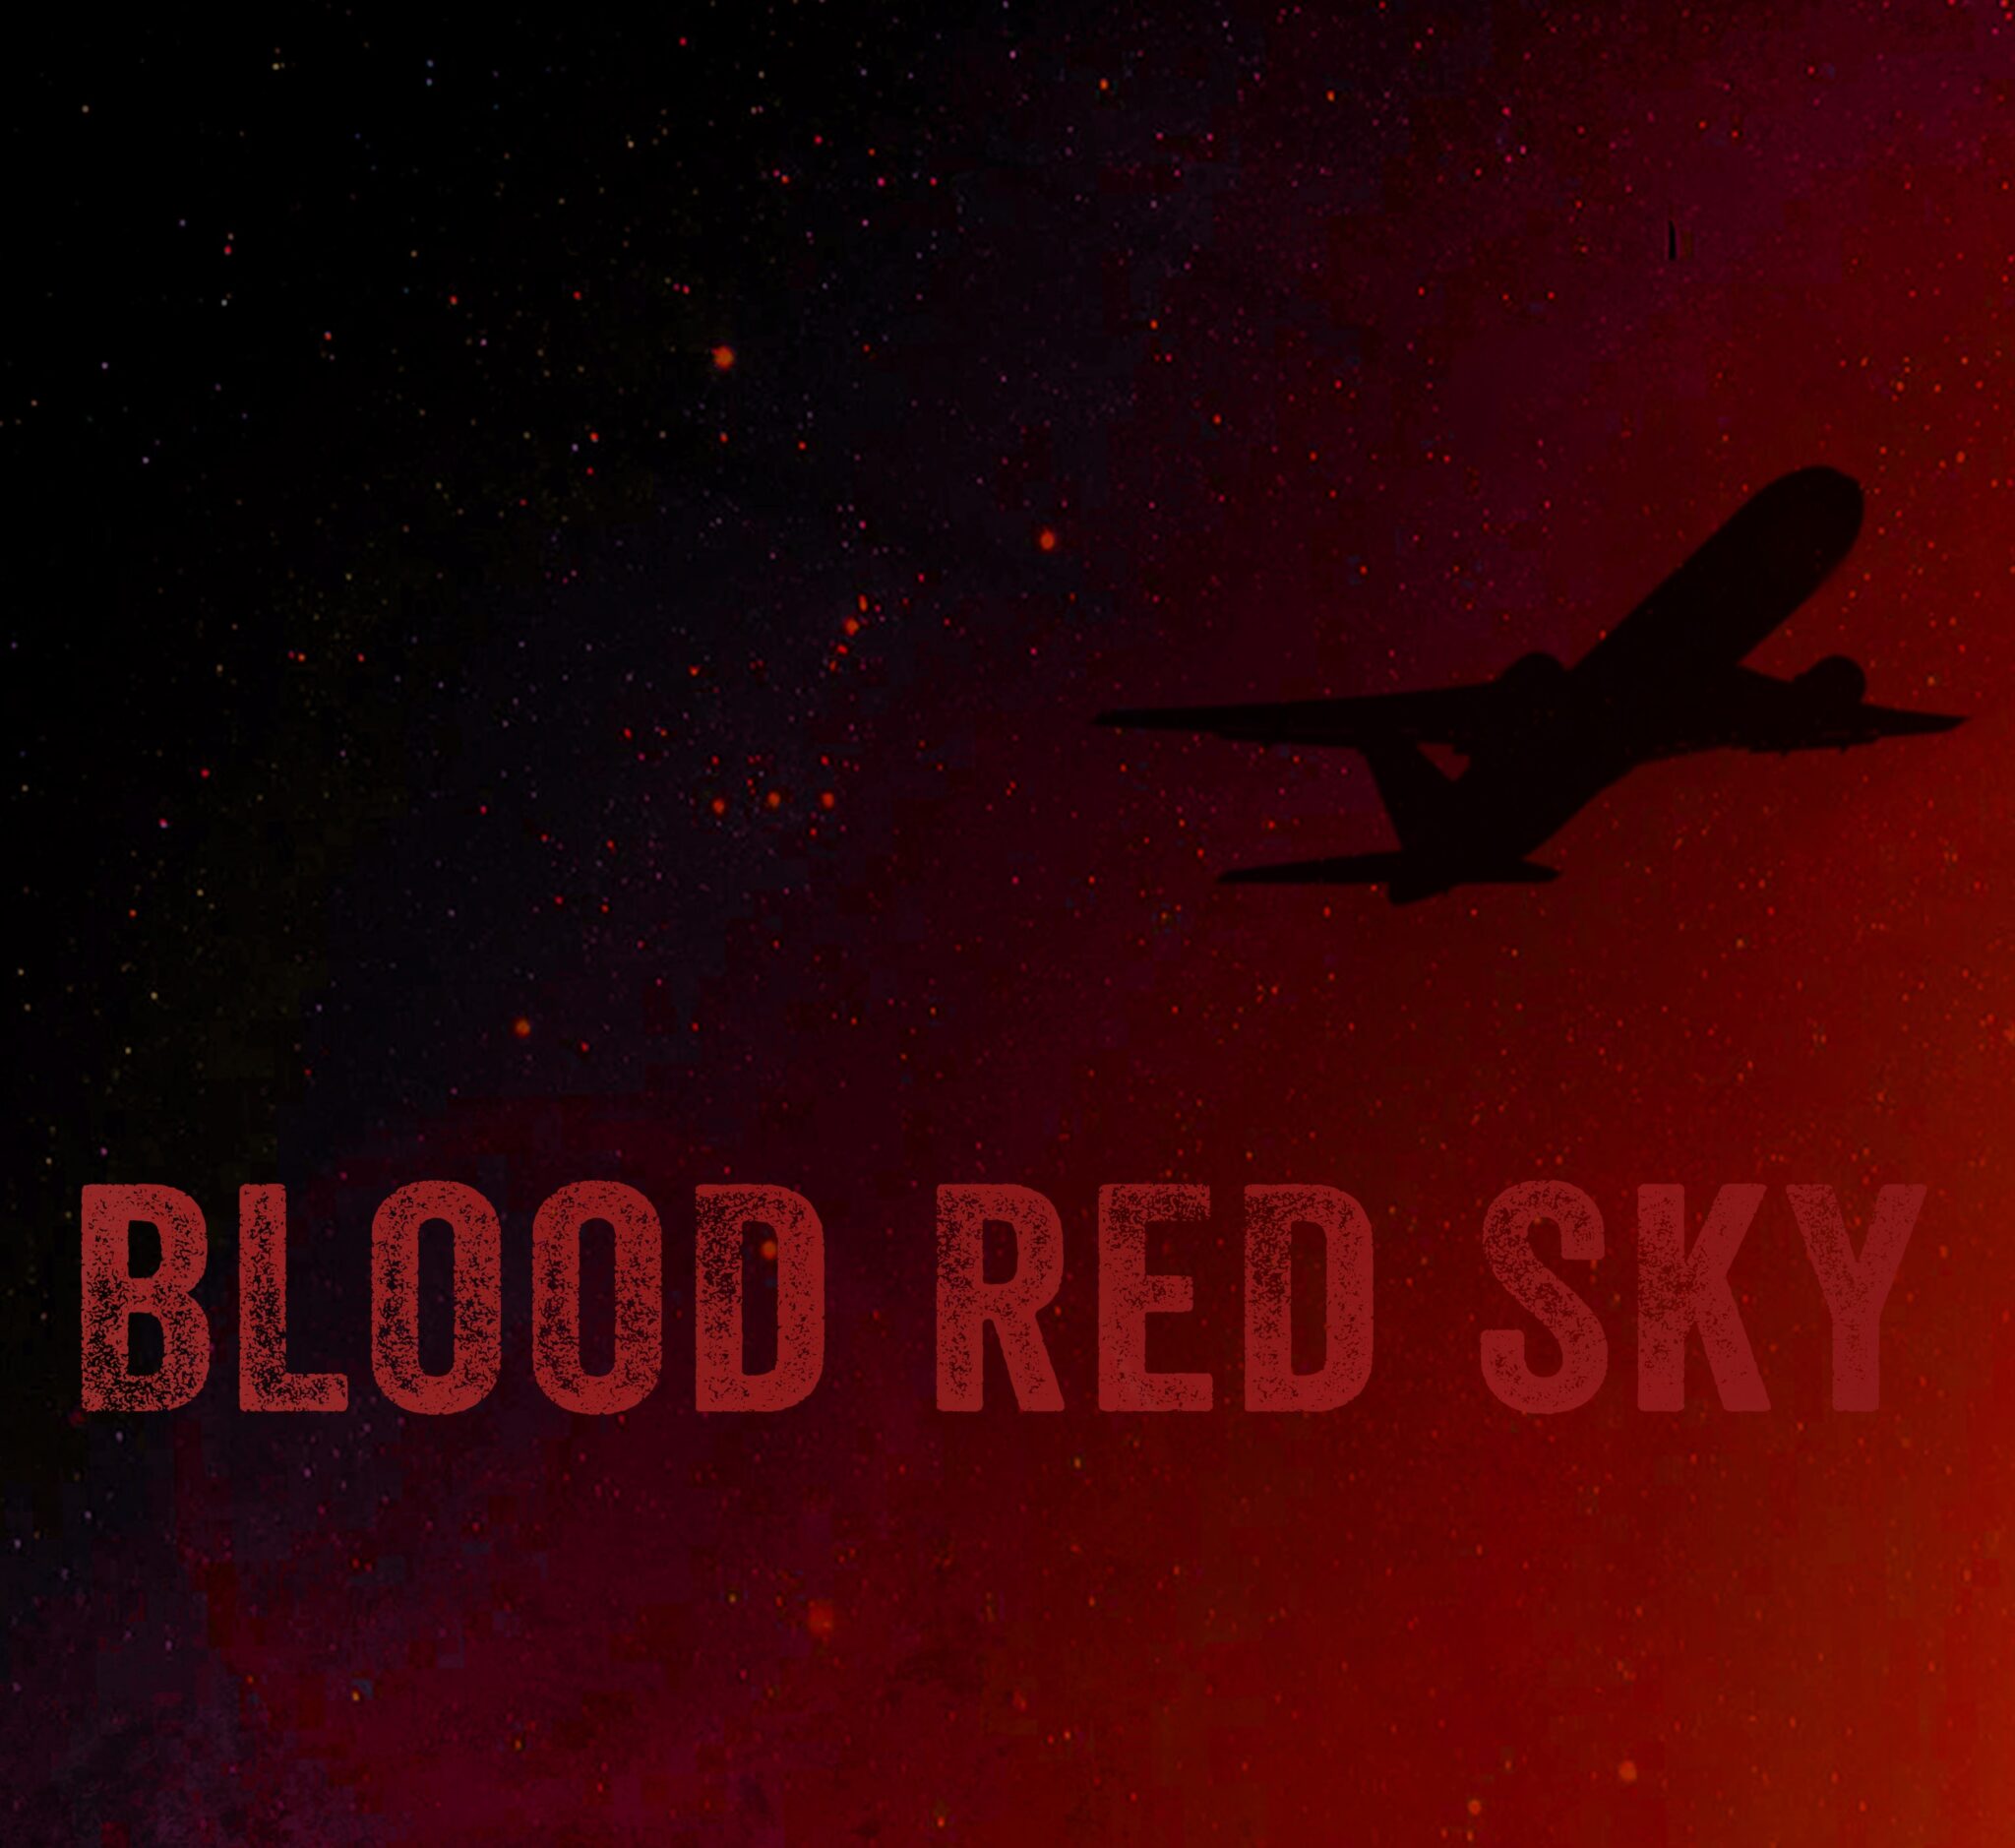 blood red sky movie online